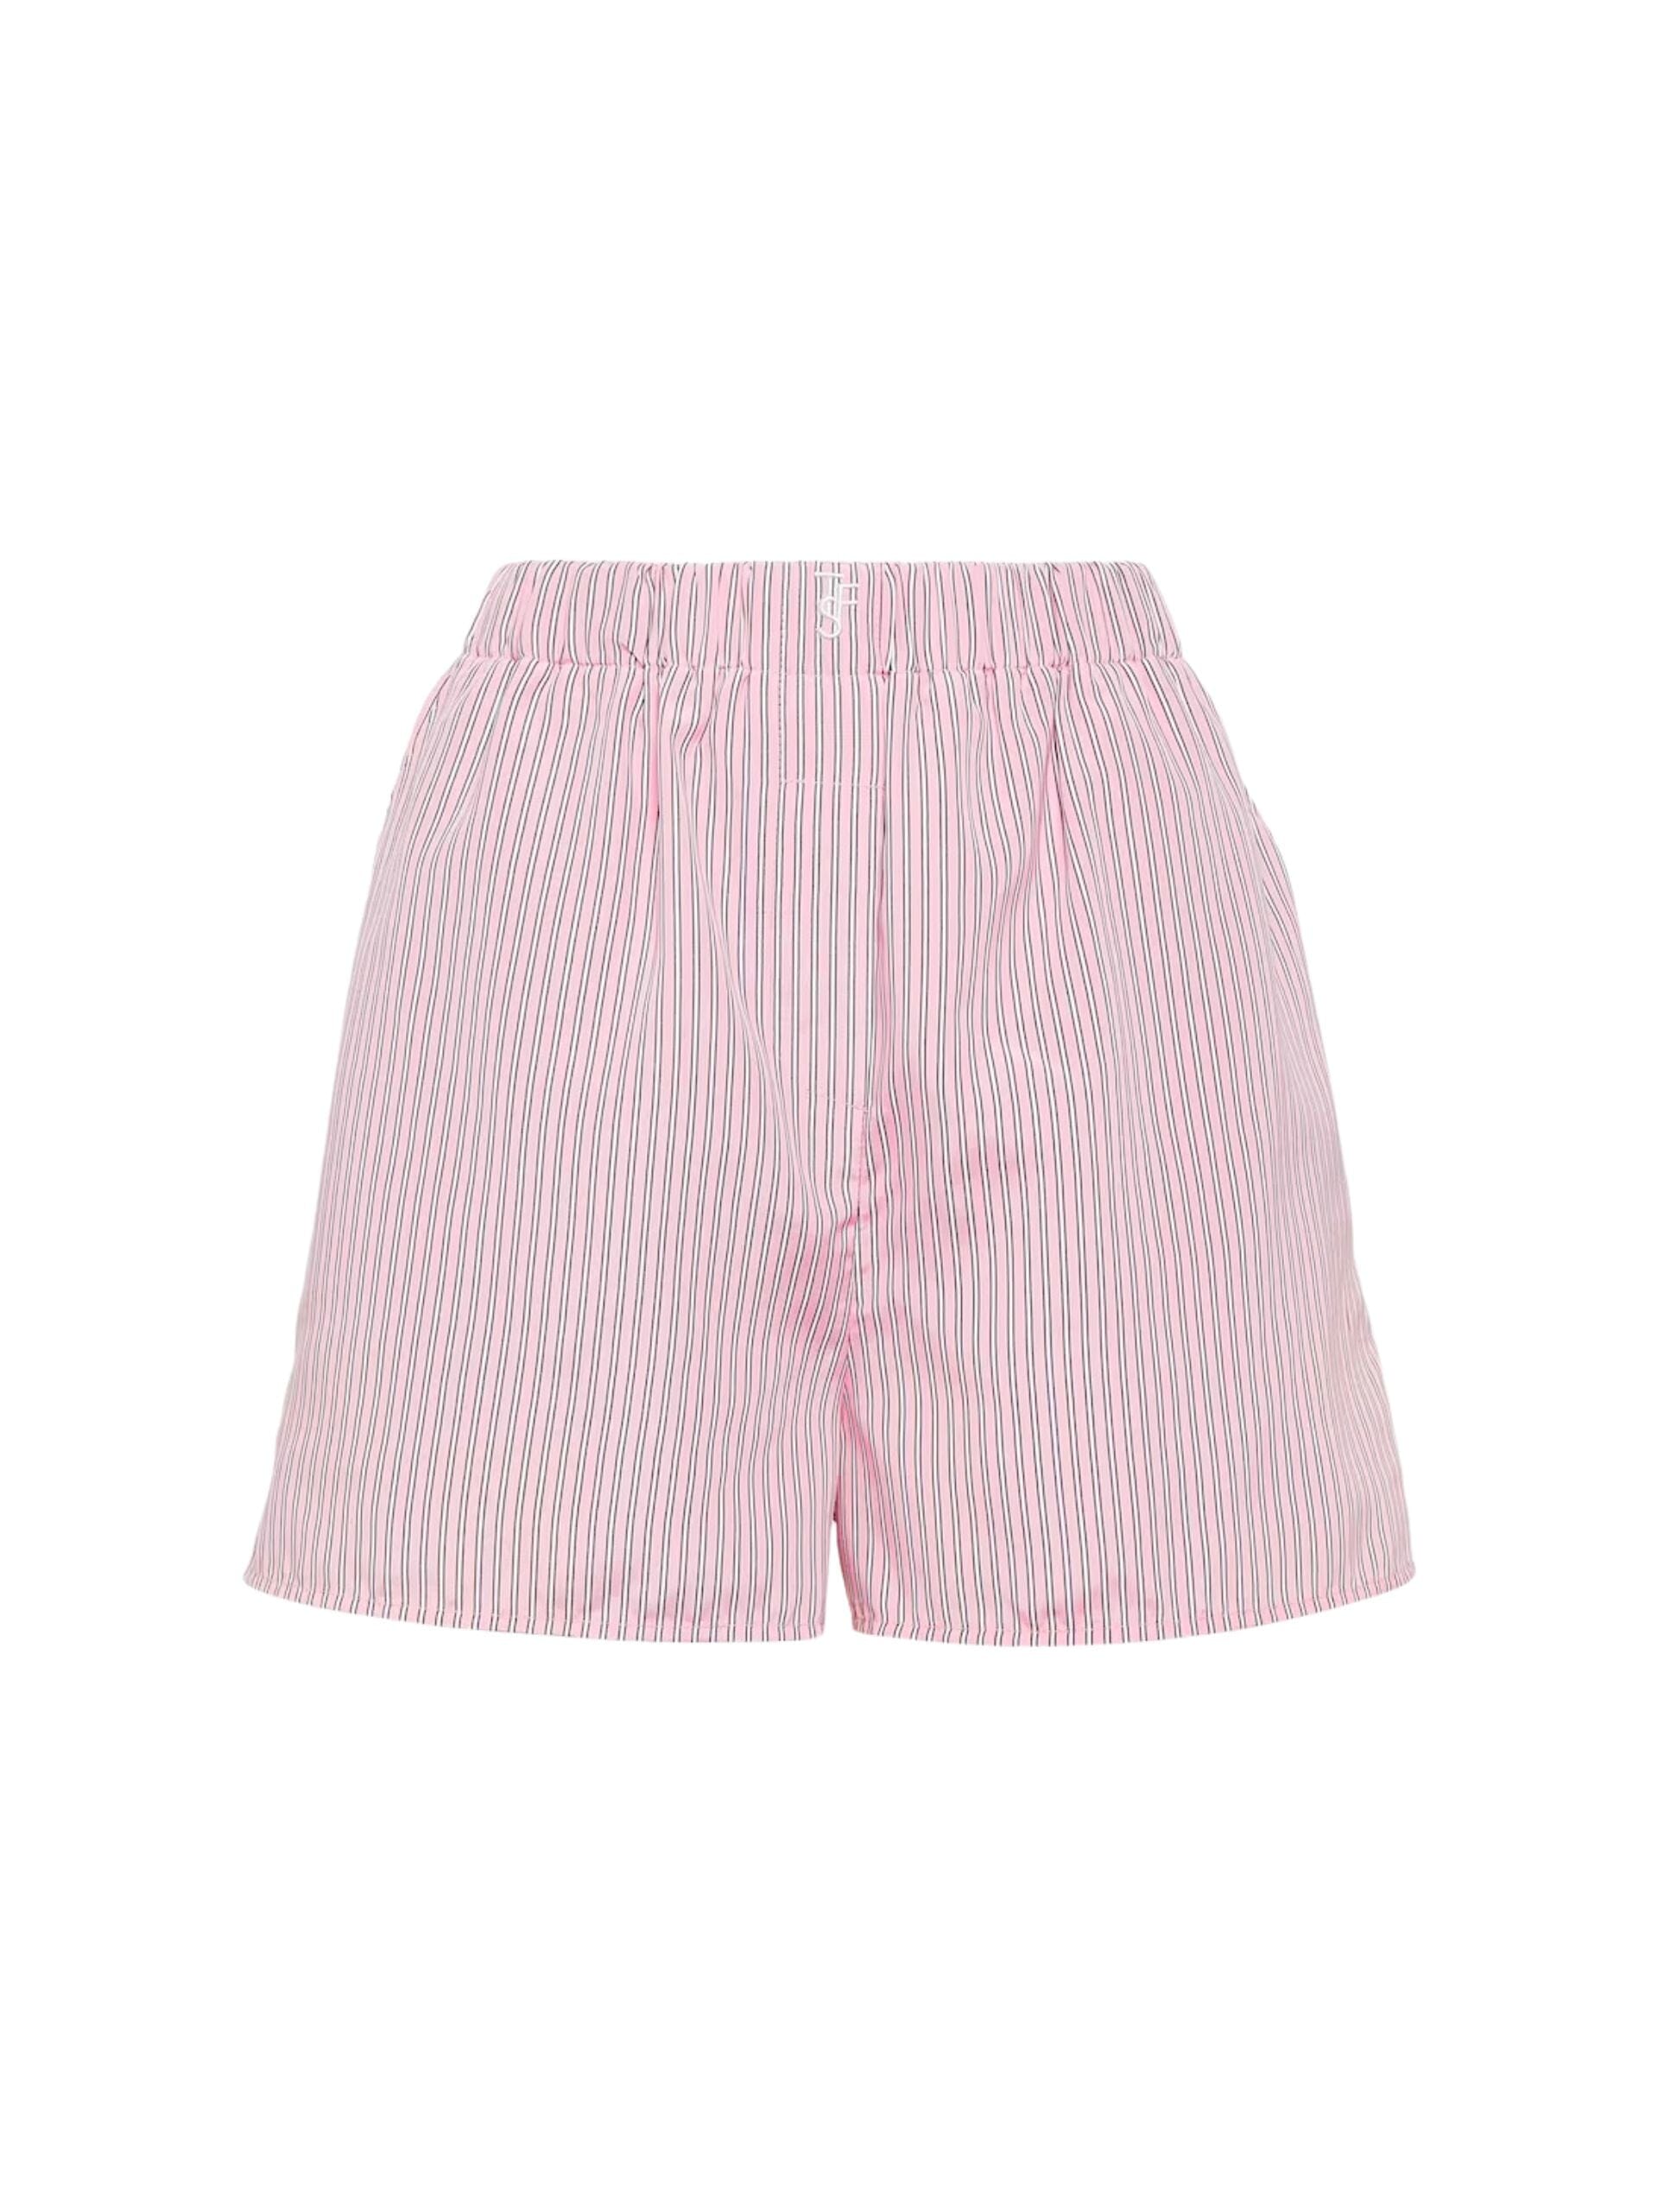 Lui Oxford Shorts / Pink & Black Stripe Womens Frankie Shop 